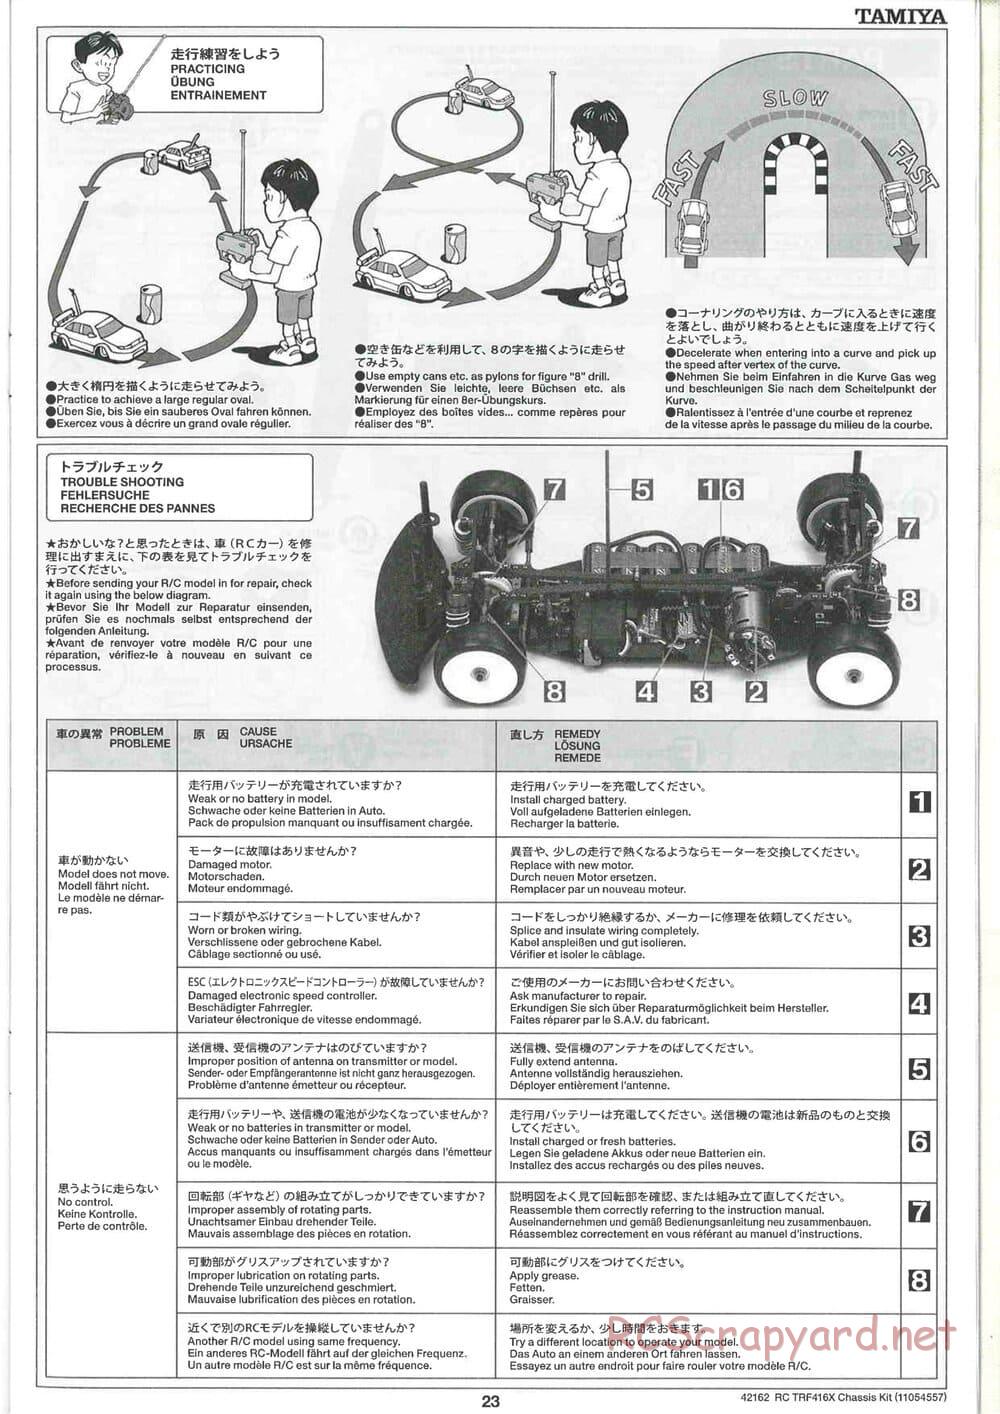 Tamiya - TRF416X Chassis - Manual - Page 23